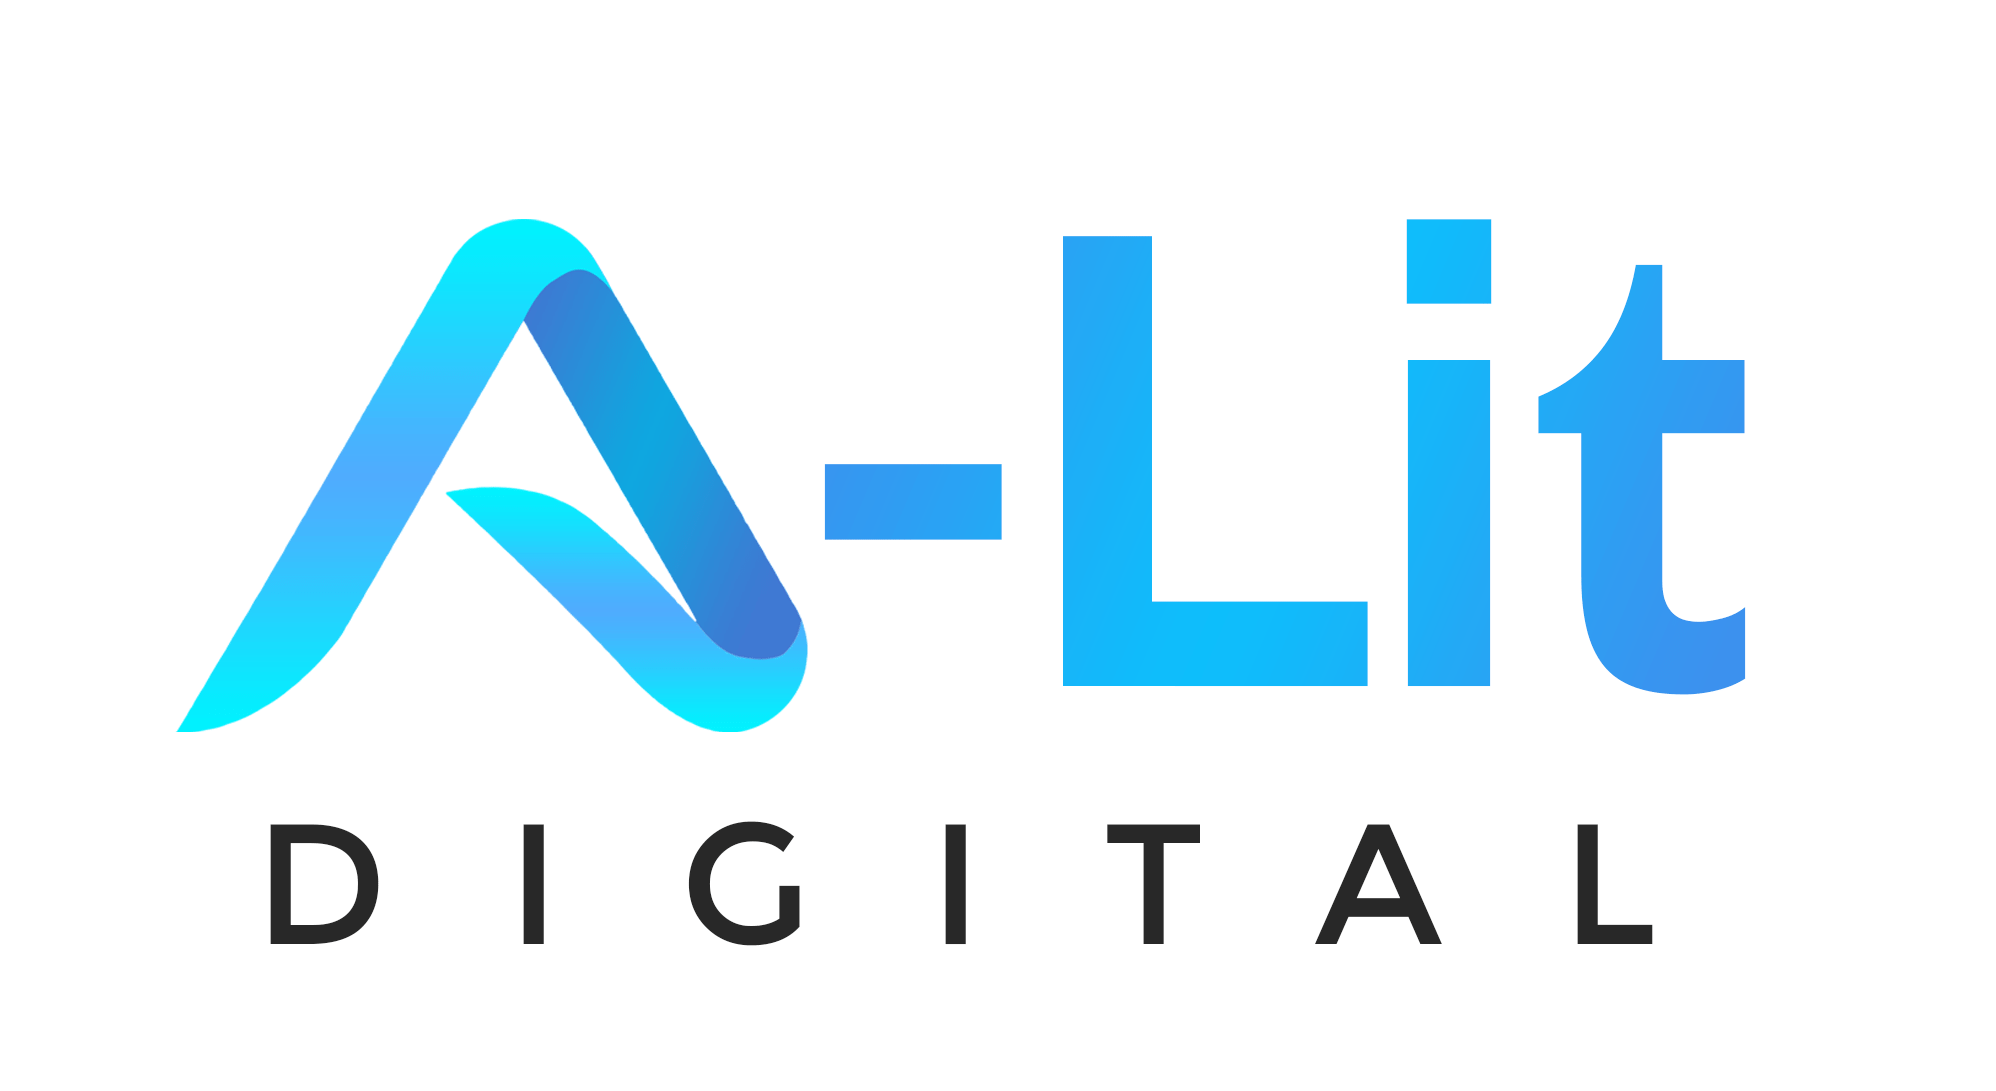 A-Lit Digital